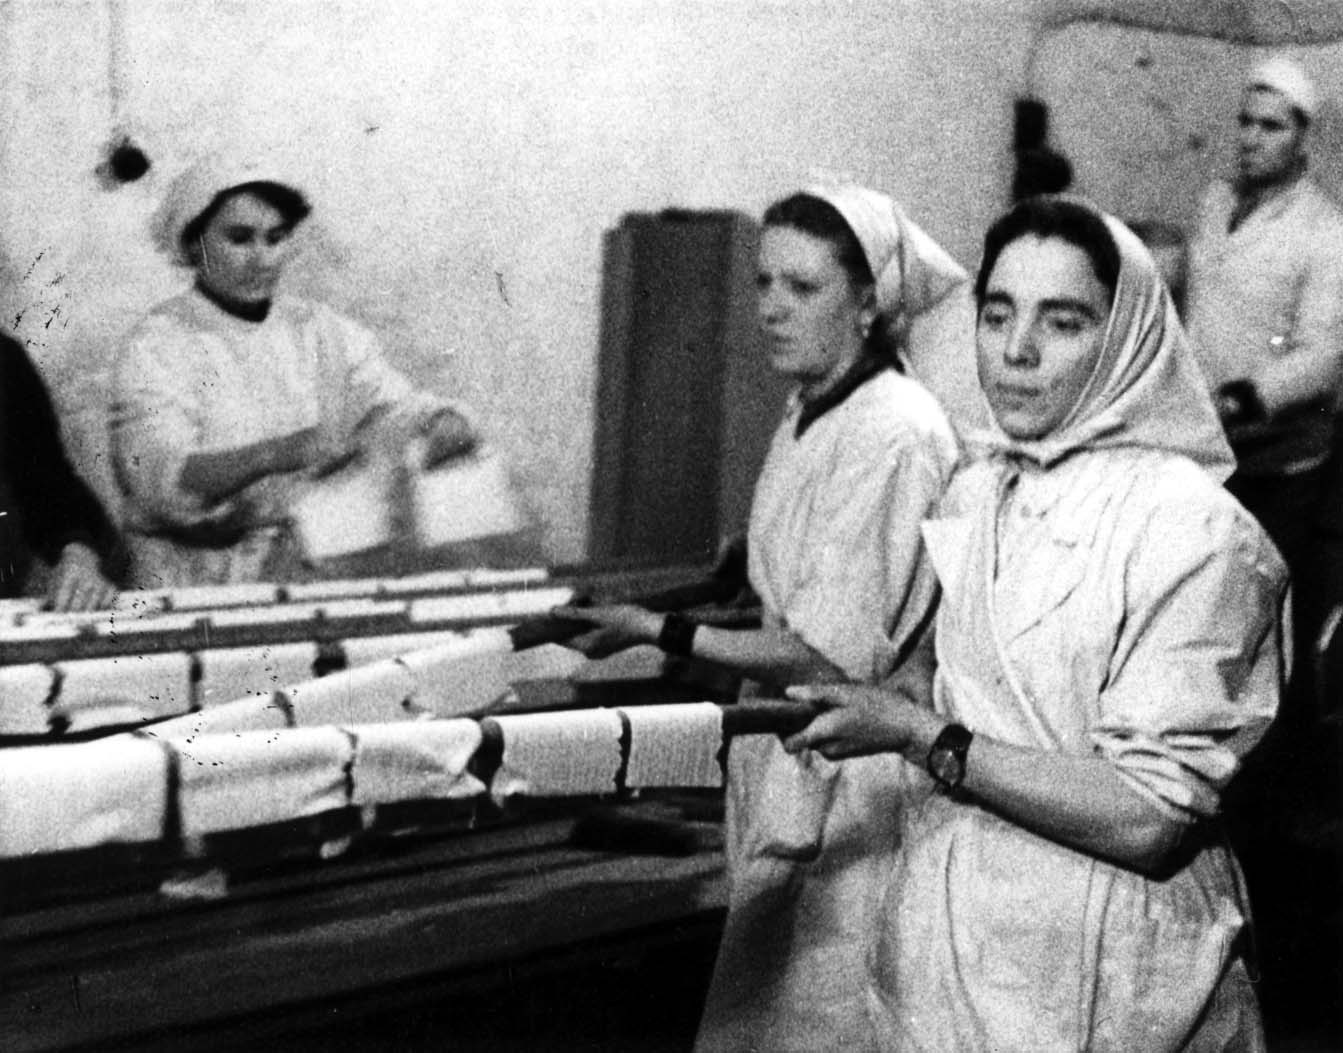 Baking matzah in the Warsaw Ghetto, Poland